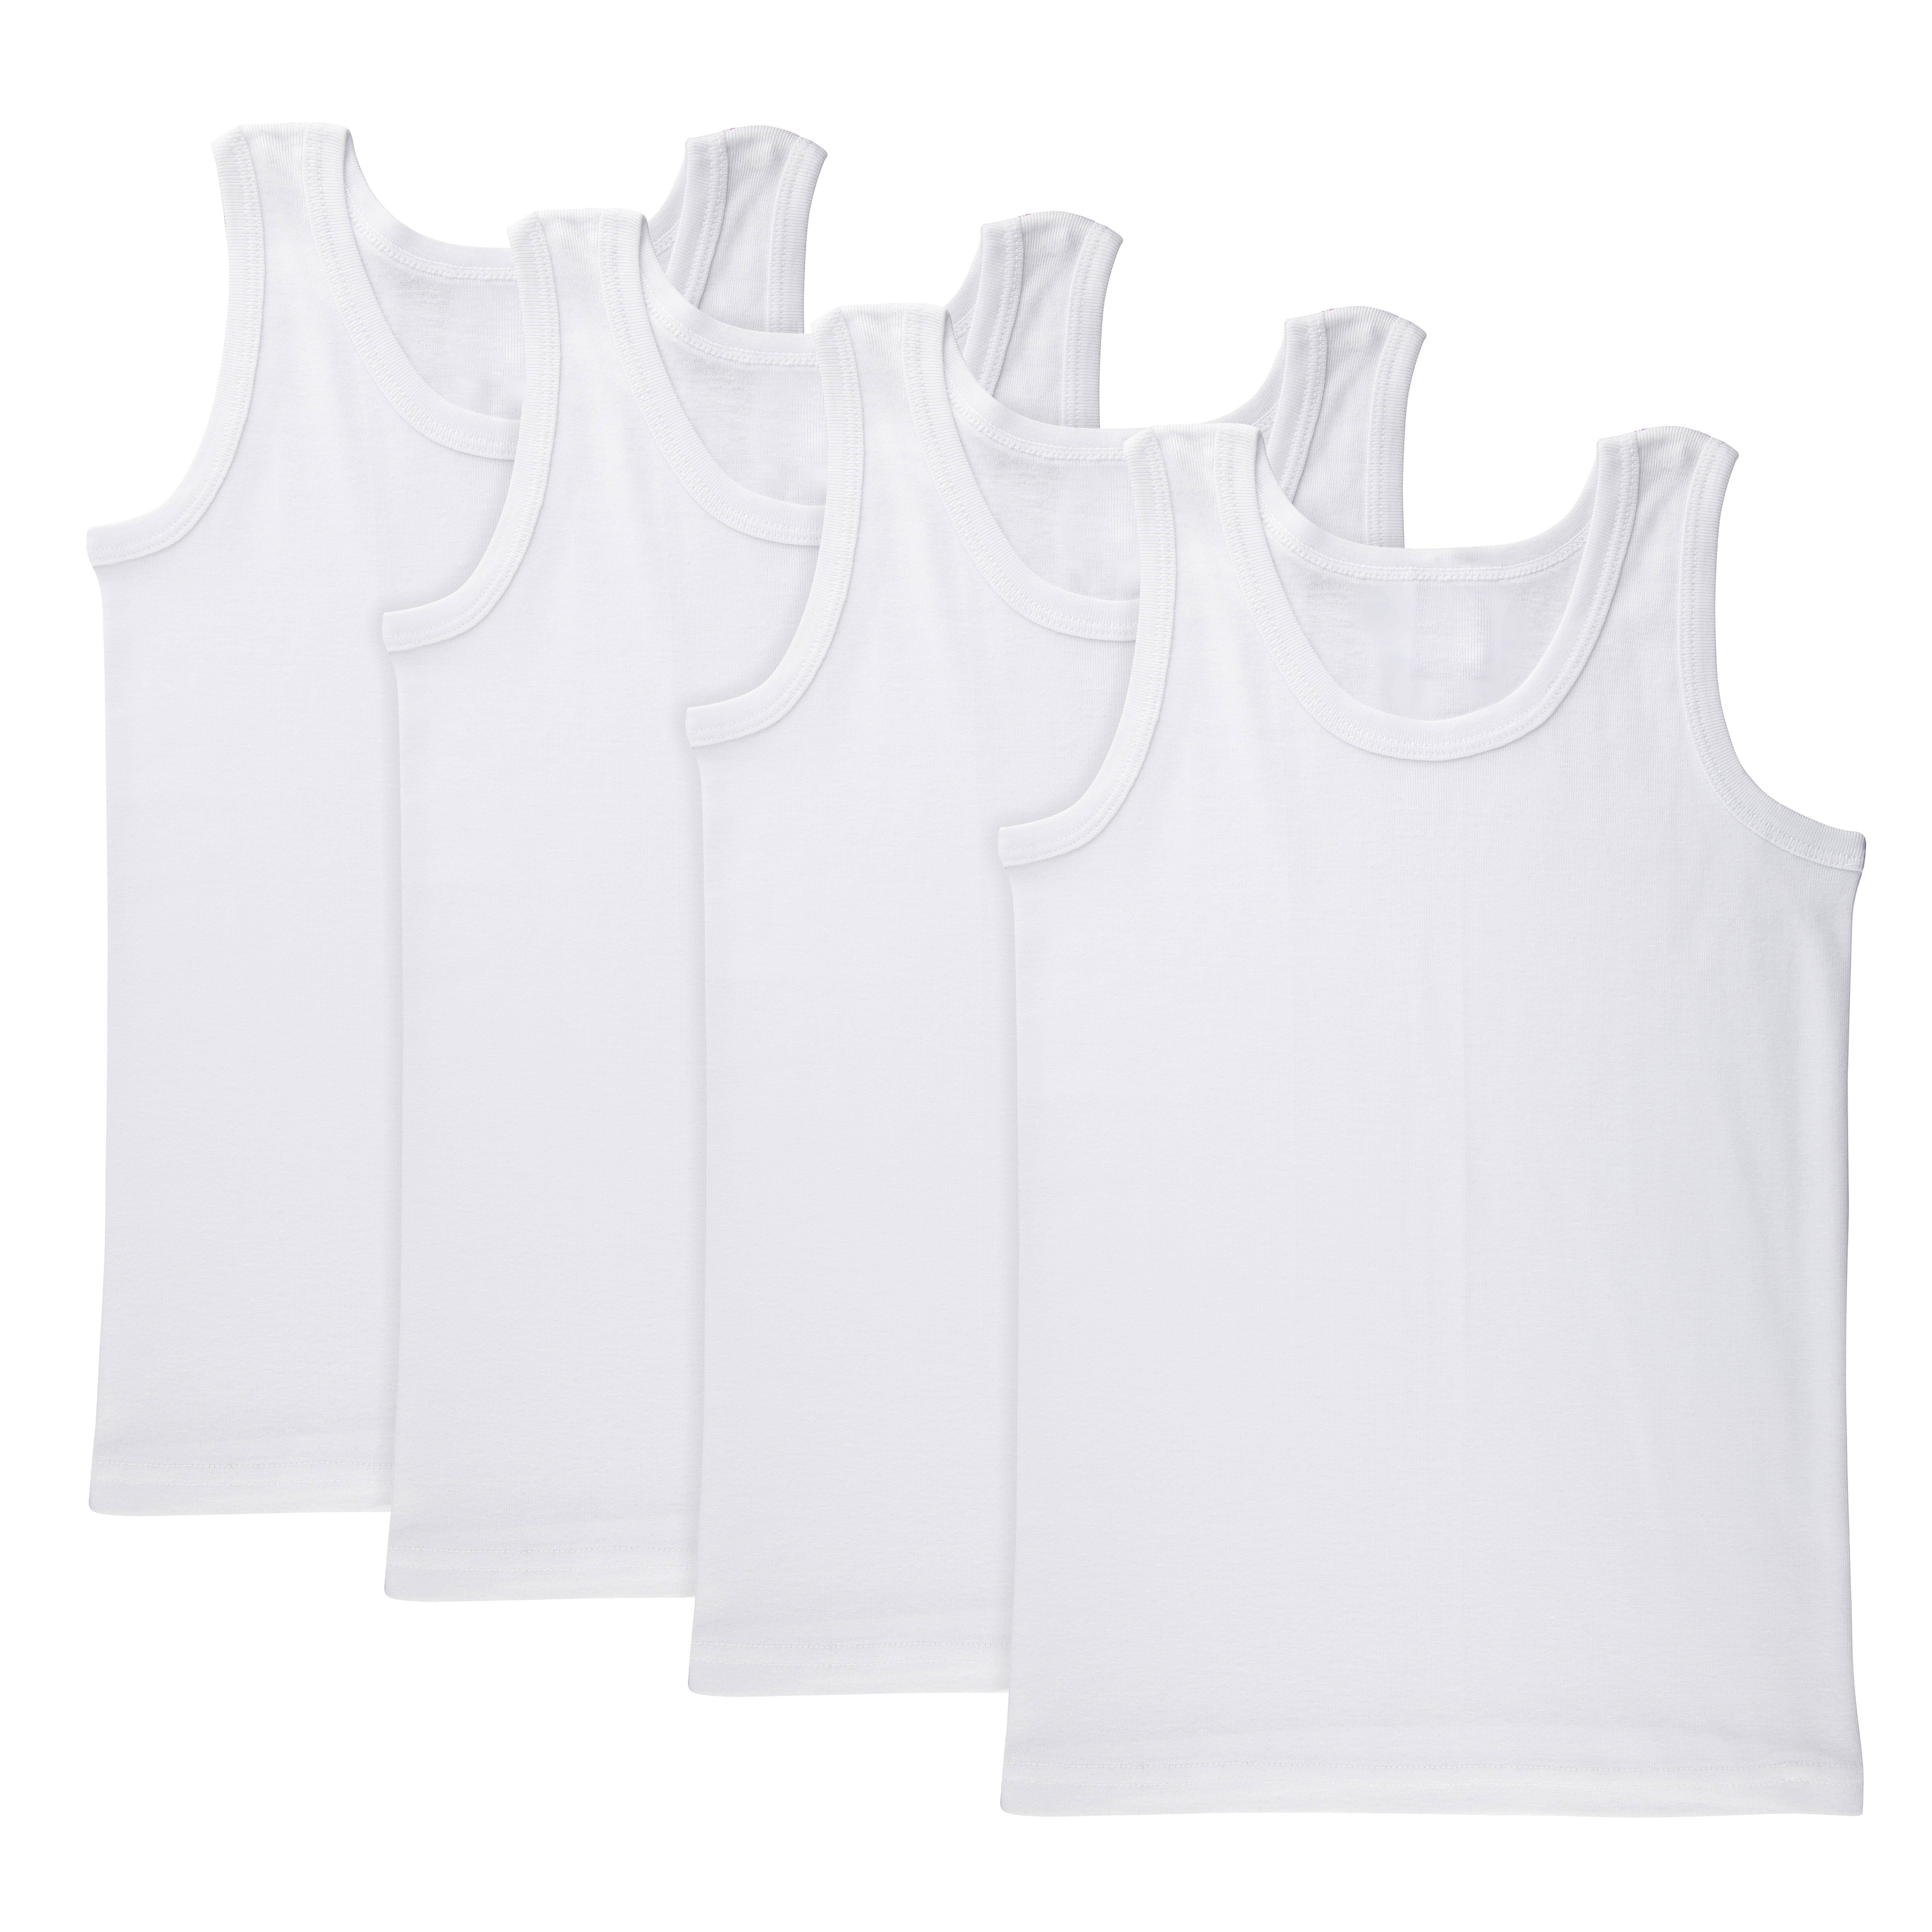 Brix Boys White Undershirts - Tank Tops Tagless Super Soft 5-6 Years ...